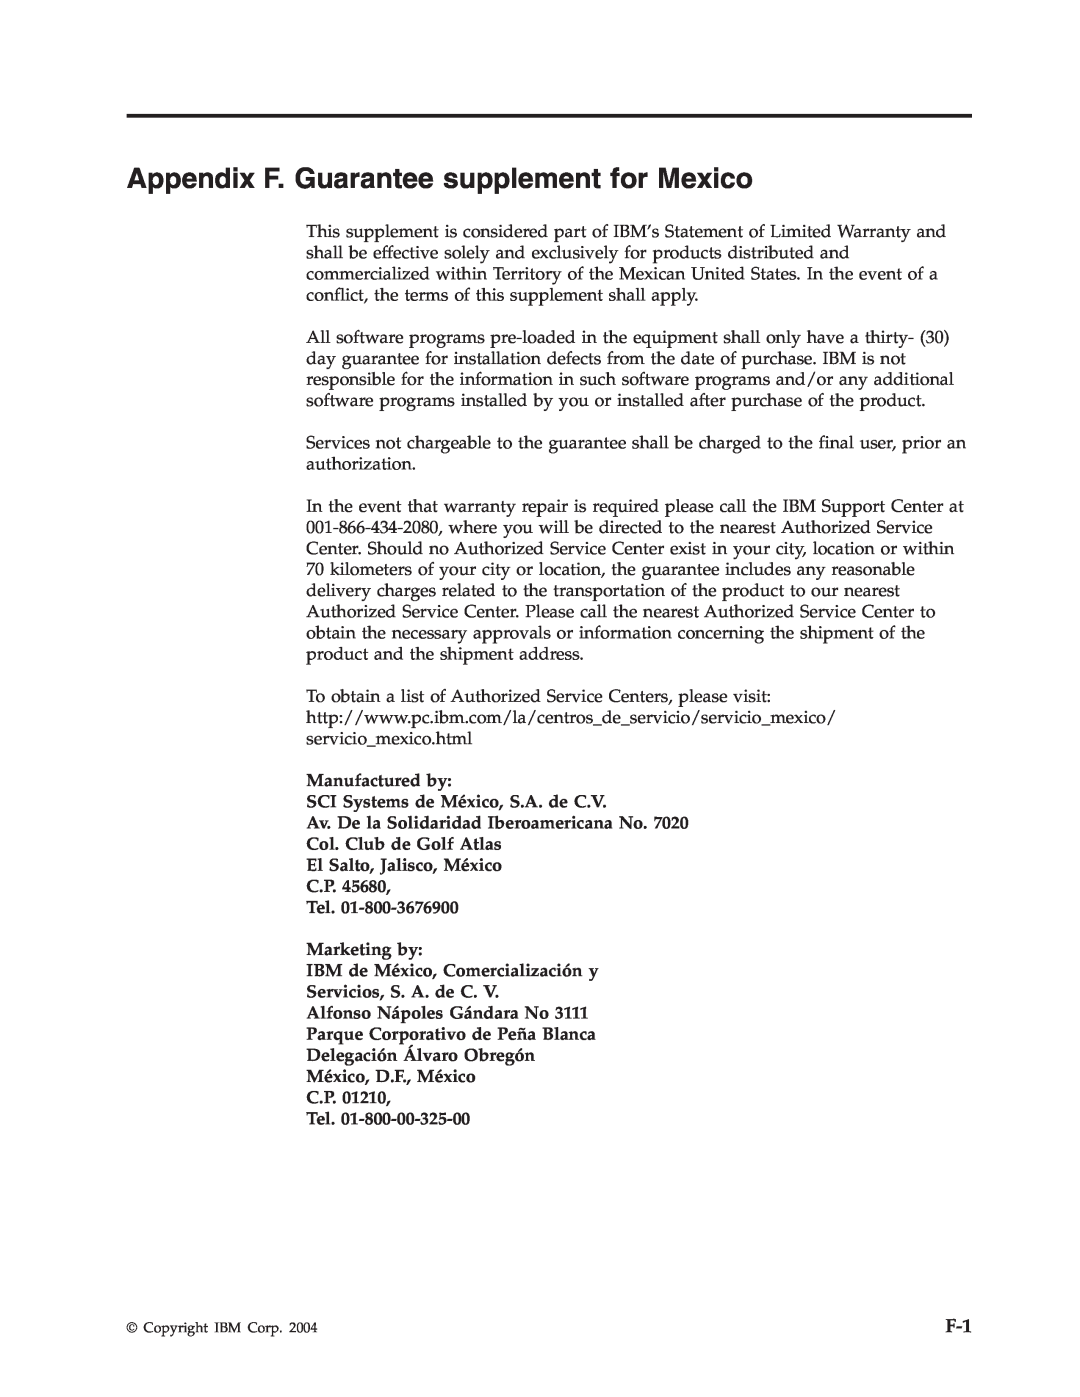 IBM PROJECTOR C400 manual Appendix F. Guarantee supplement for Mexico, Manufactured by SCI Systems de México, S.A. de C.V 